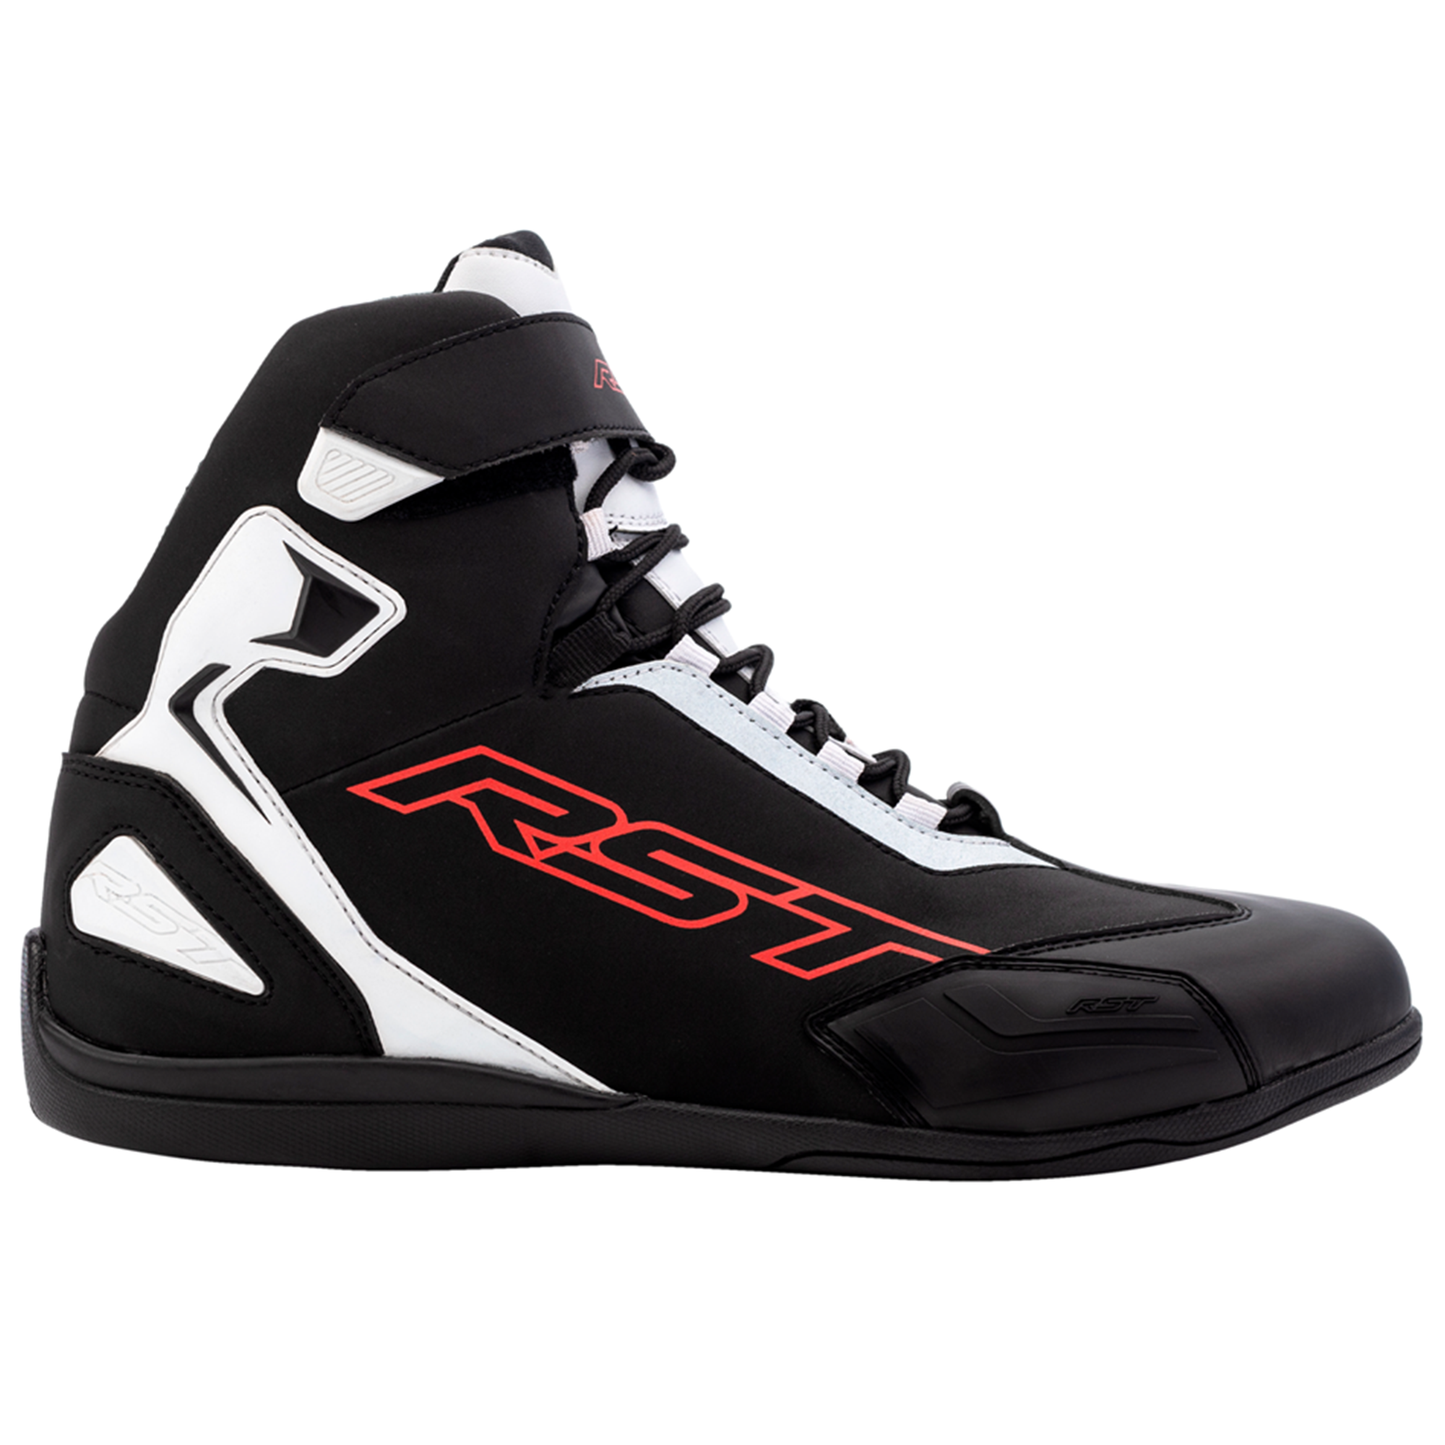 RST Sabre Moto Shoe Men's (CE) Boots - Black/White/Red (3053)